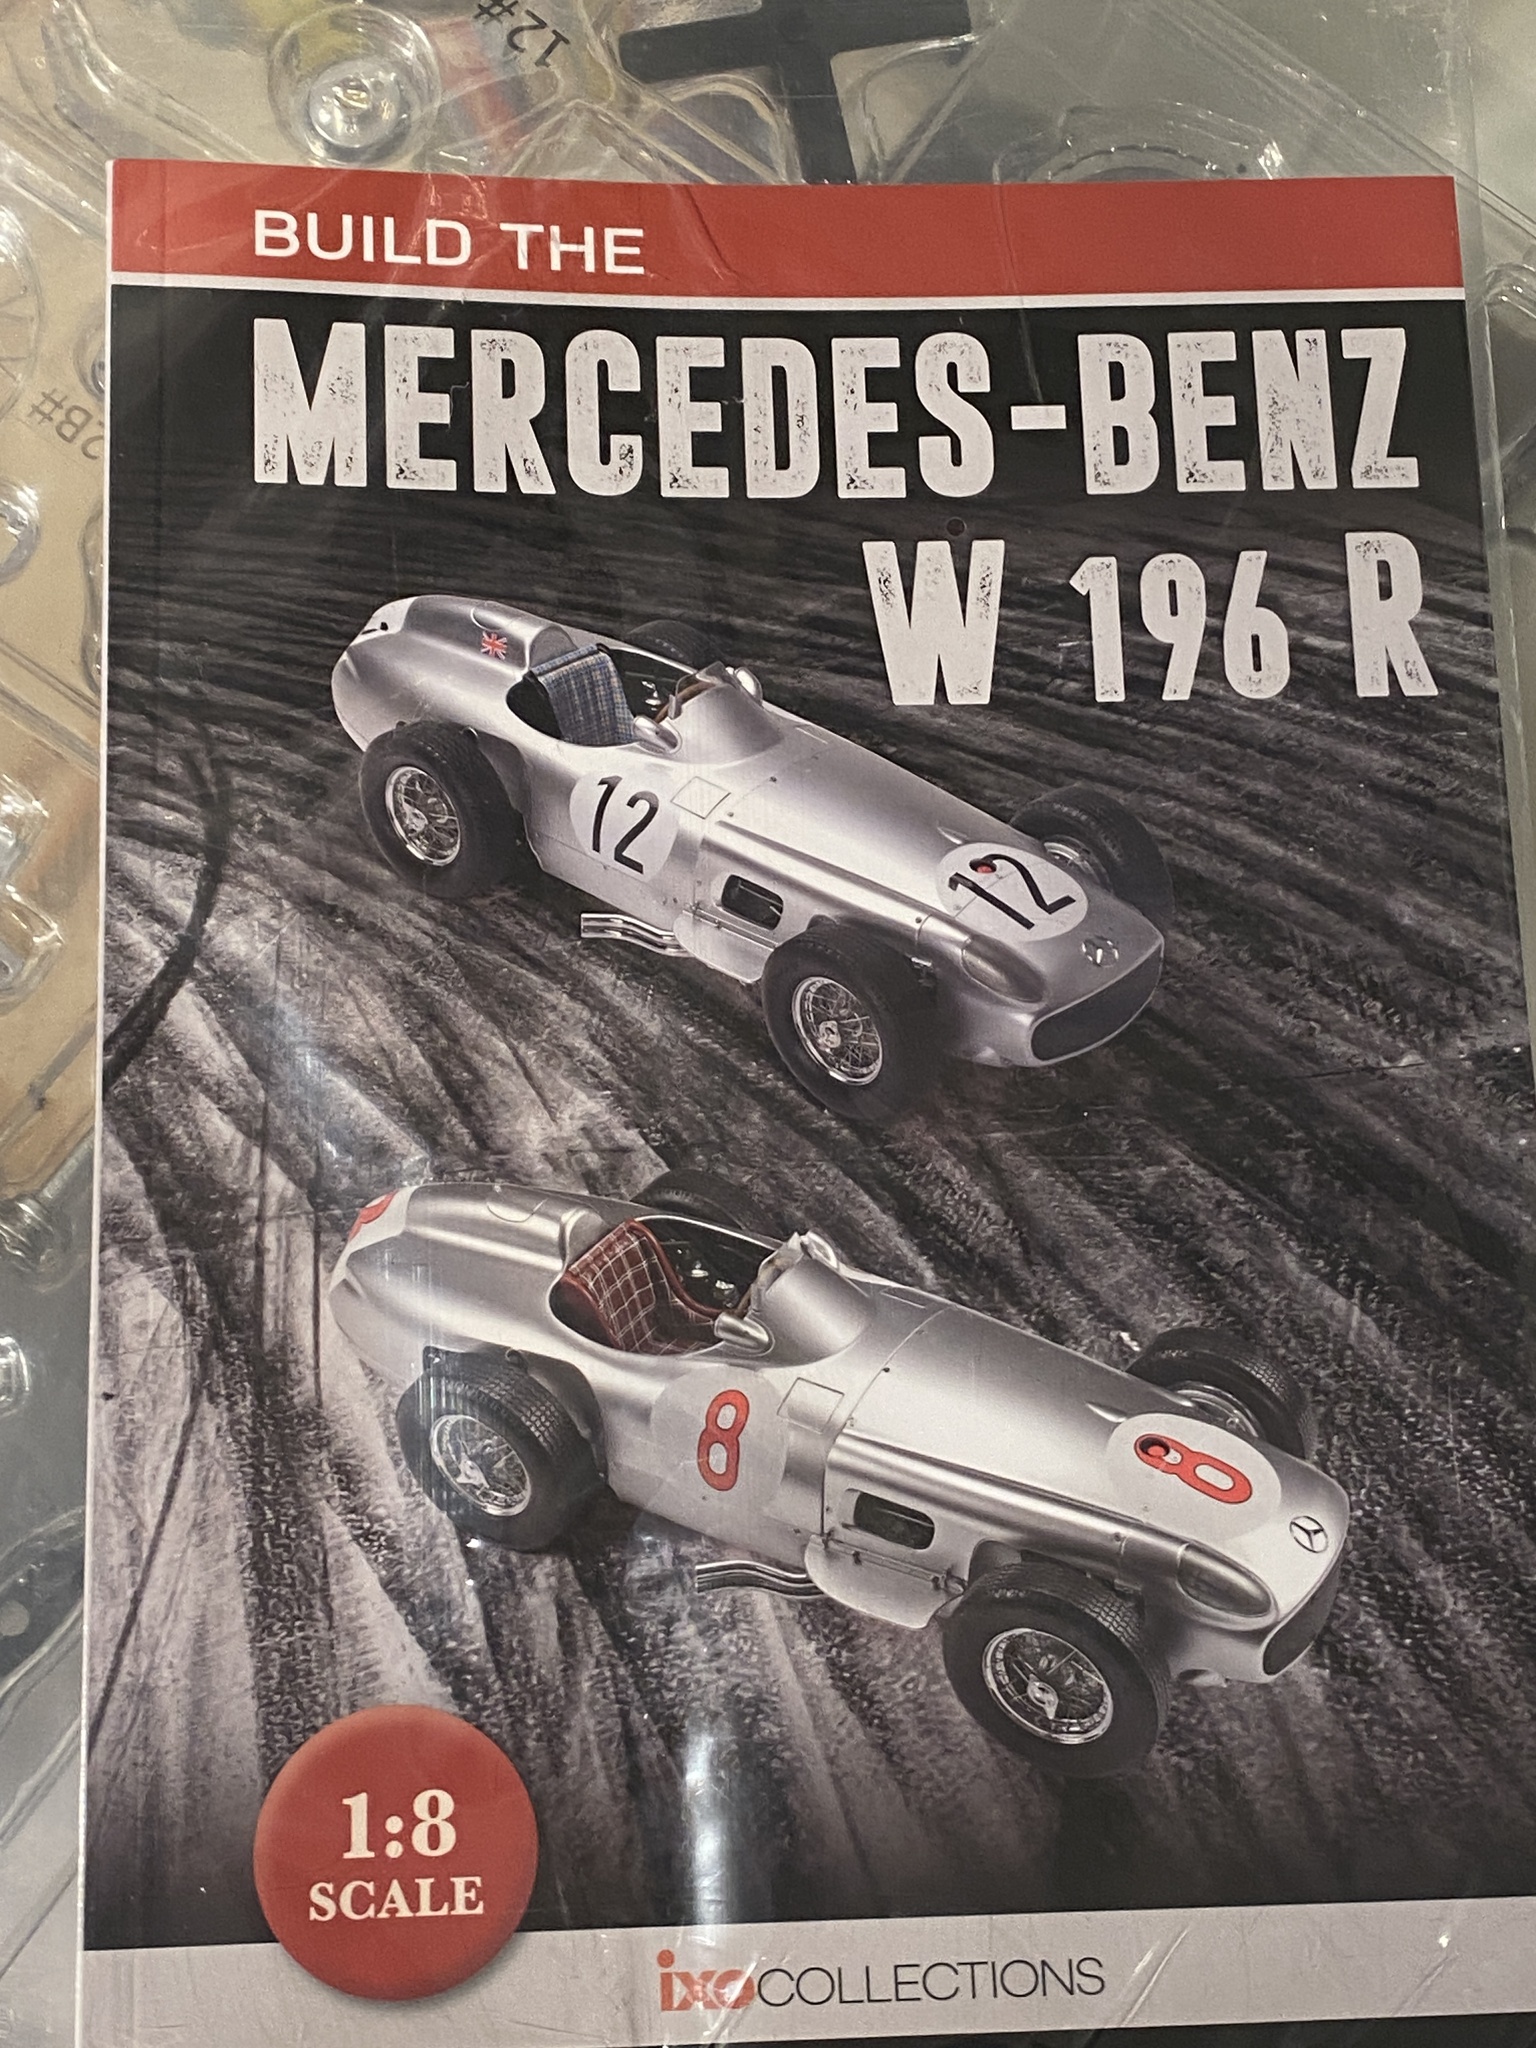 Skala 1/8 Mercedes-Benz W196 i metall, Förare Stirling Moss, från Ixo Collections